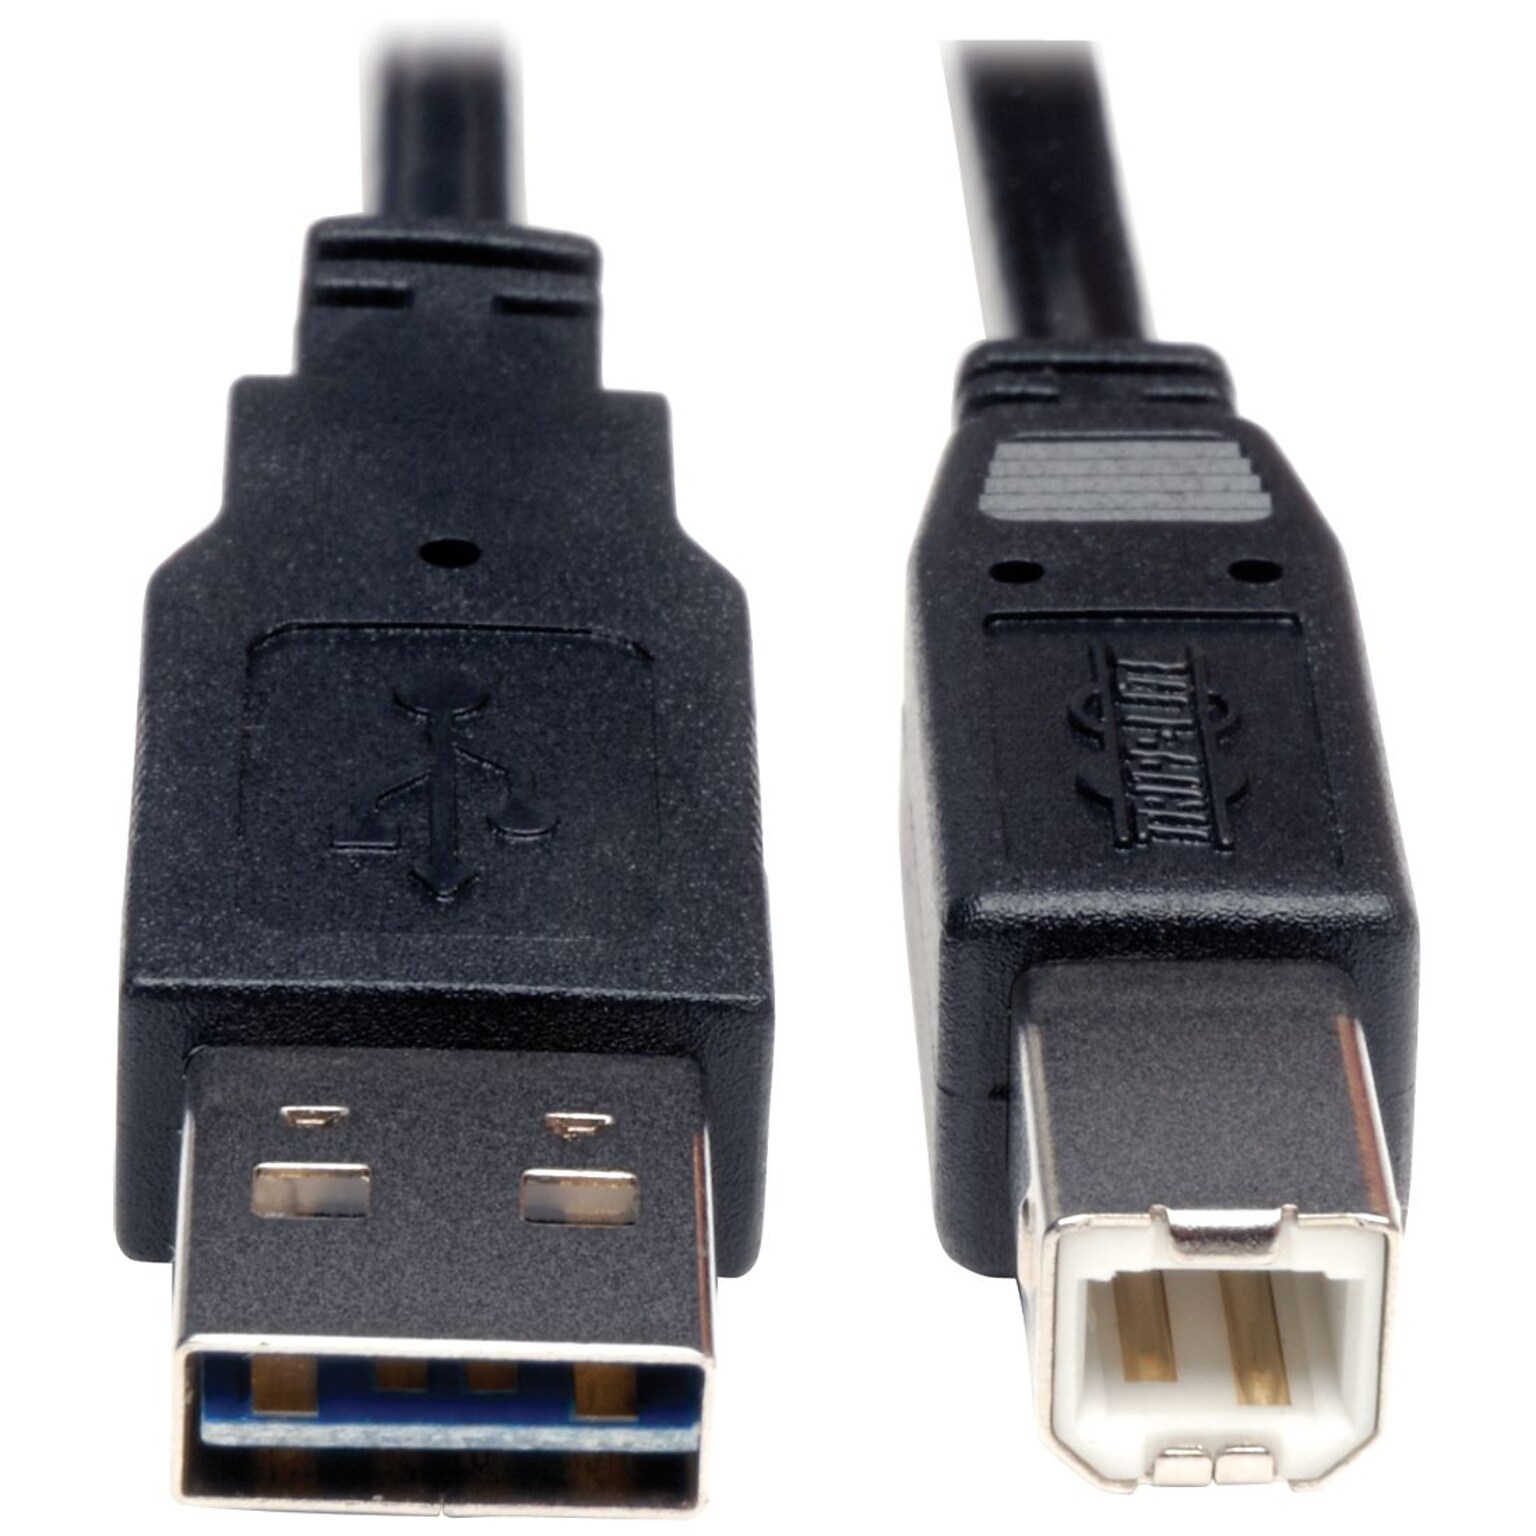 Tripp Lite 10 Universal Reversible USB 2.0 A Male to B Male USB Cable; Black